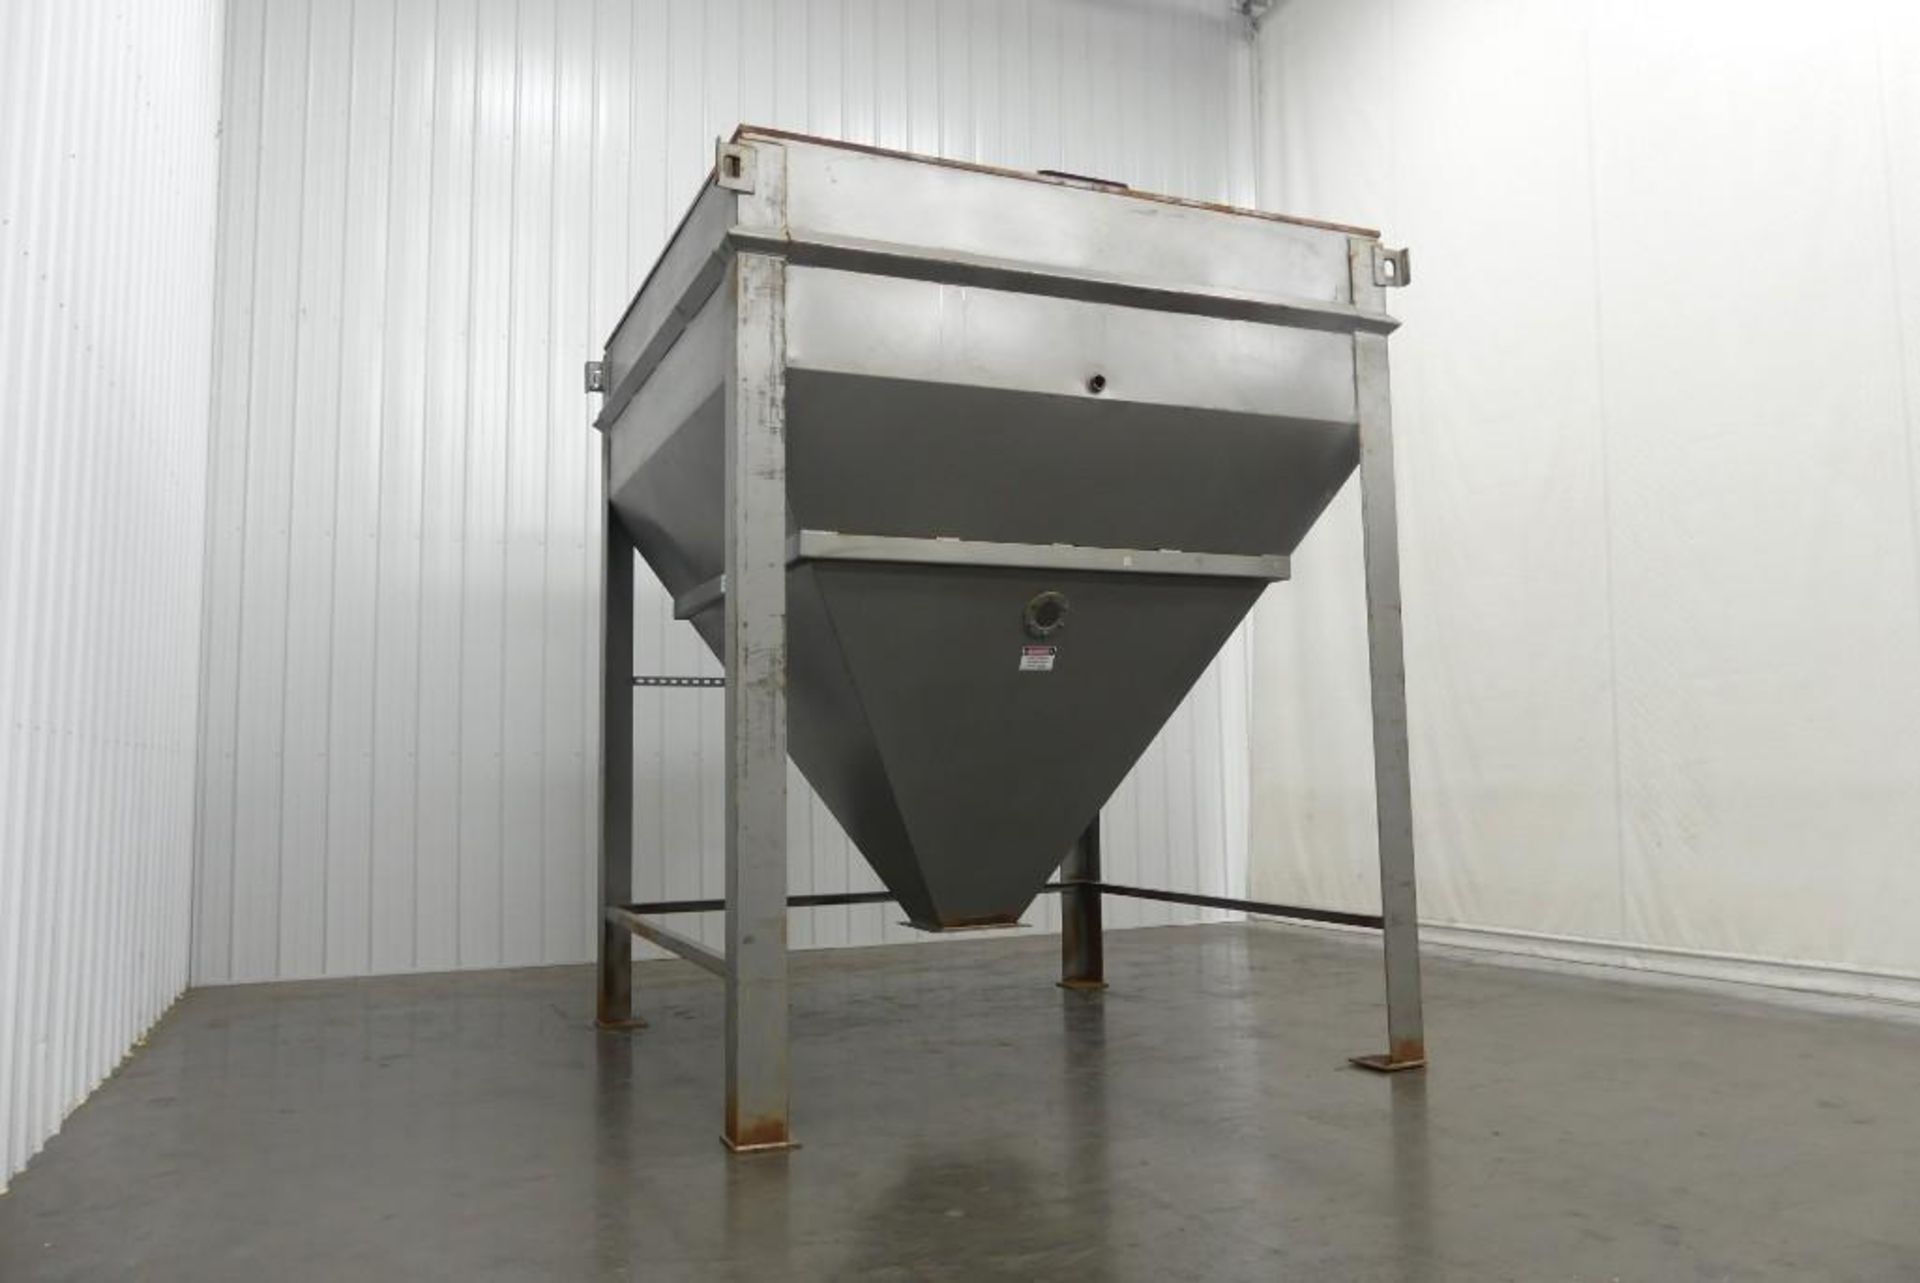 Mild Steel Hopper 280 Cubic Feet Capacity - Image 3 of 8